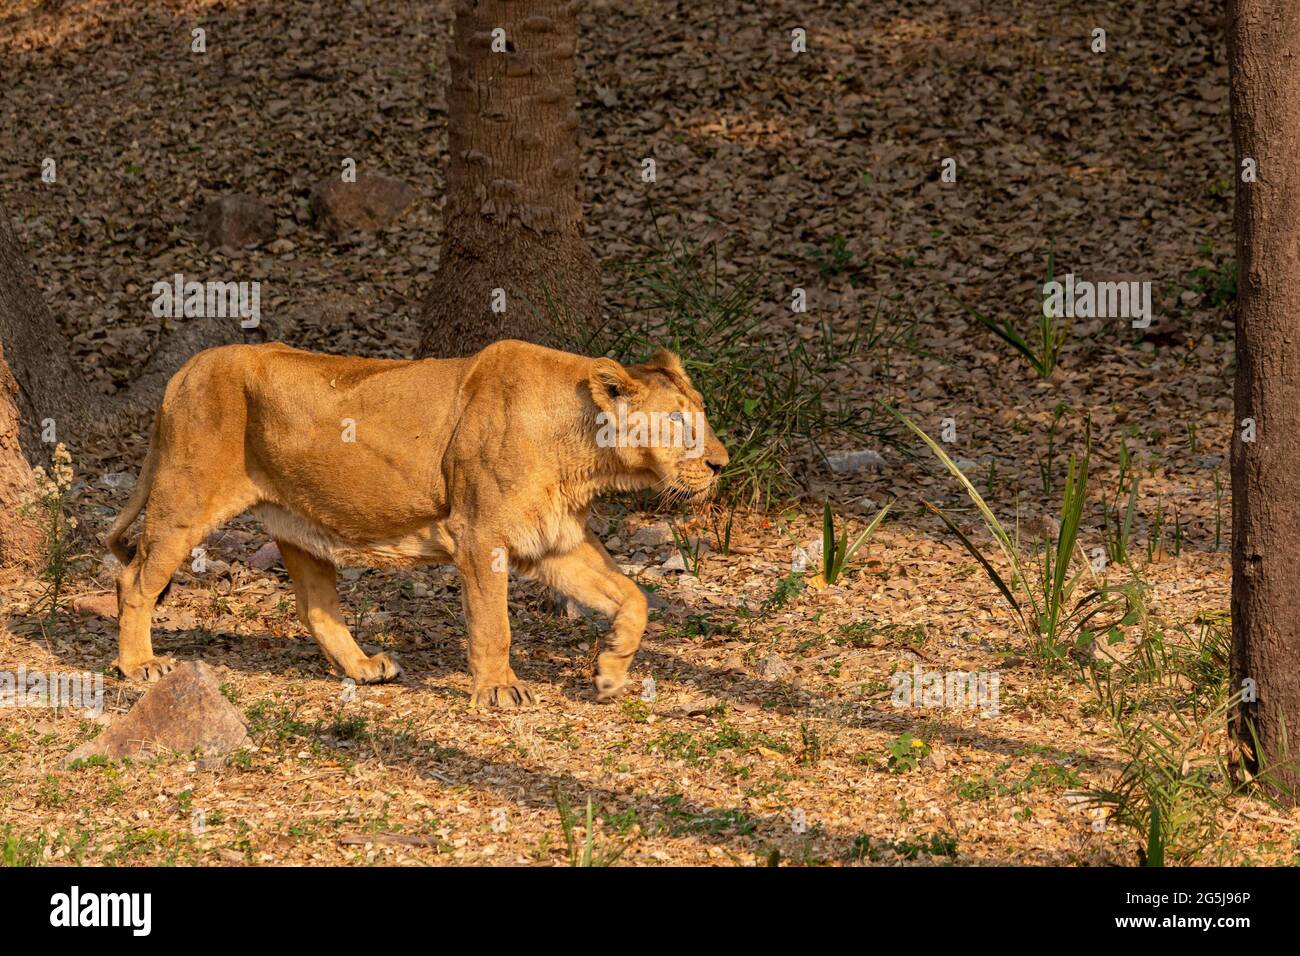 Lion At Zoo , wildlife photography Stock Photo